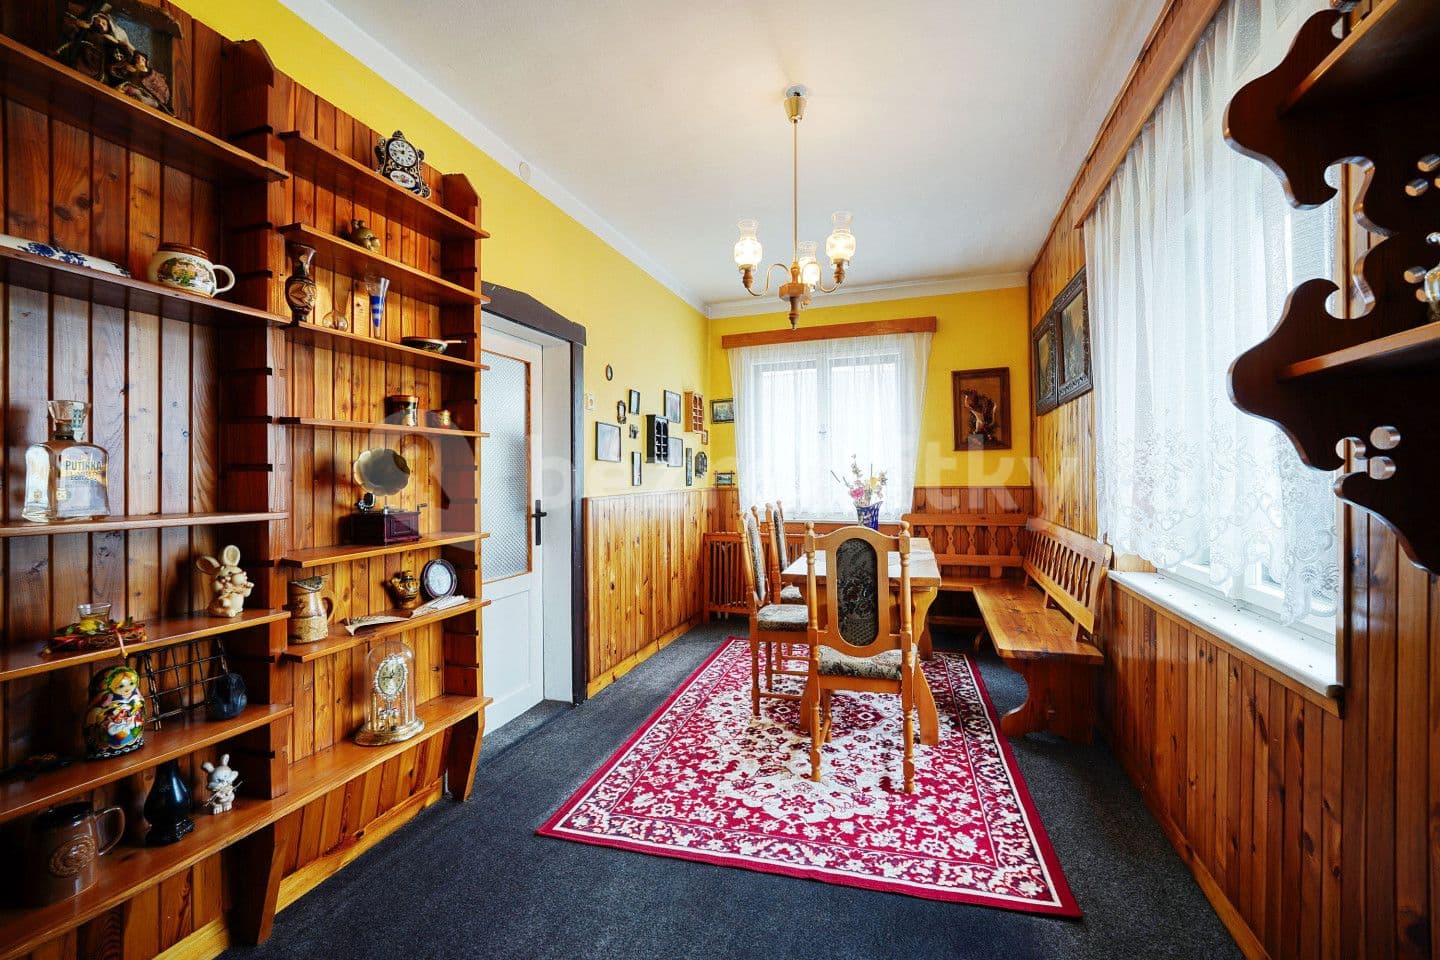 house for sale, 592 m², Otročín, Karlovarský Region